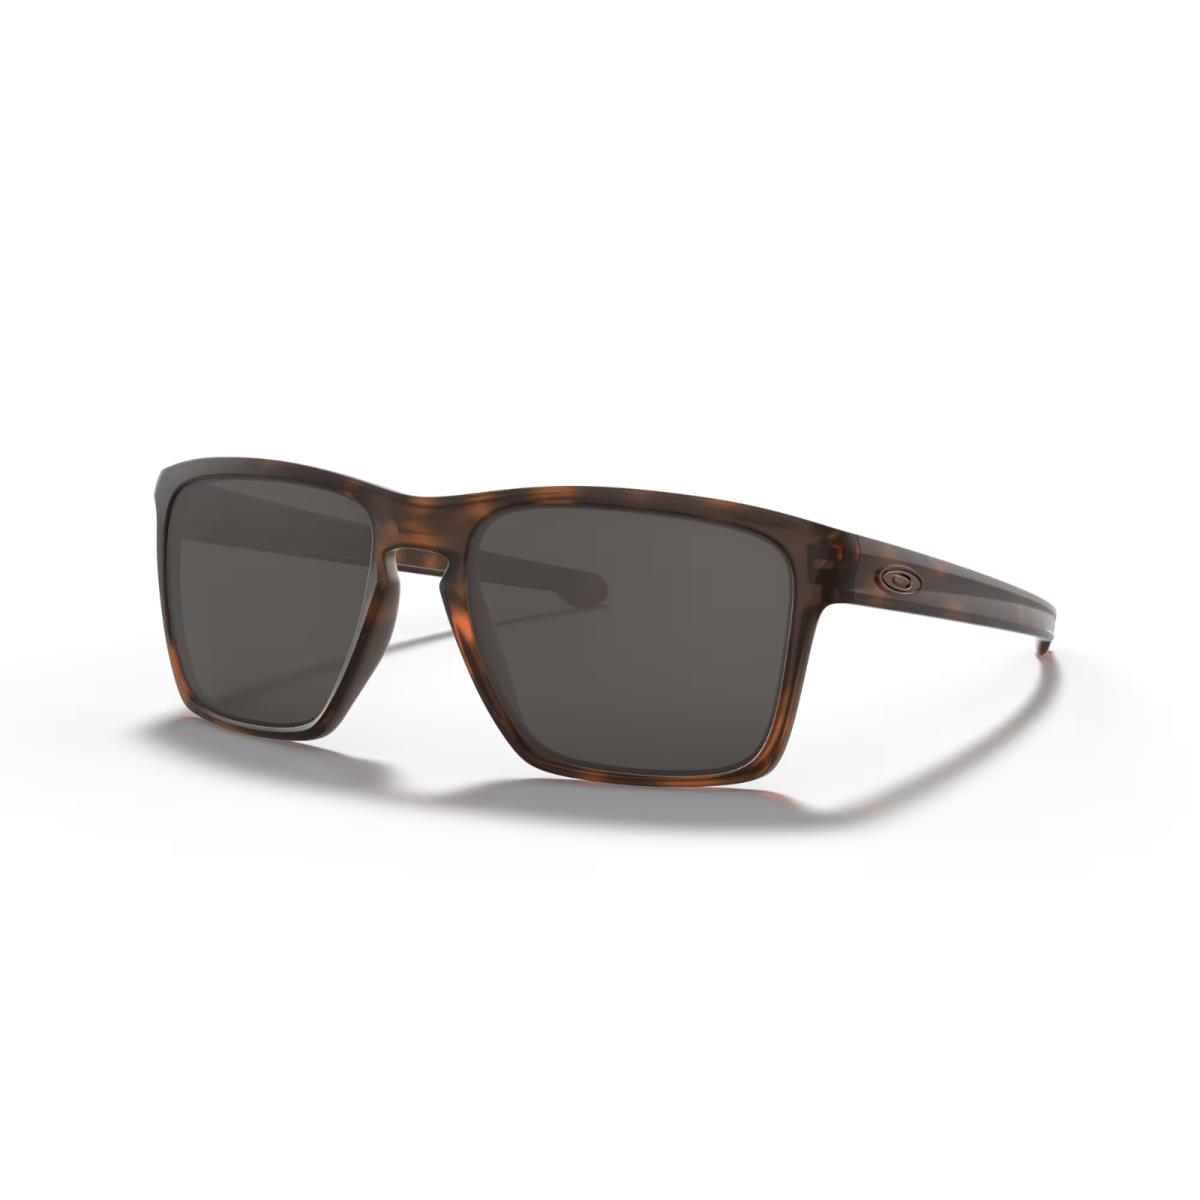 Oakley Sliver XL Sunglasses OO9341-04 Matte Brown Tortoise W/ Warm Grey Lens - Frame: Matte Brown Tortoise, Lens: WARM GREY